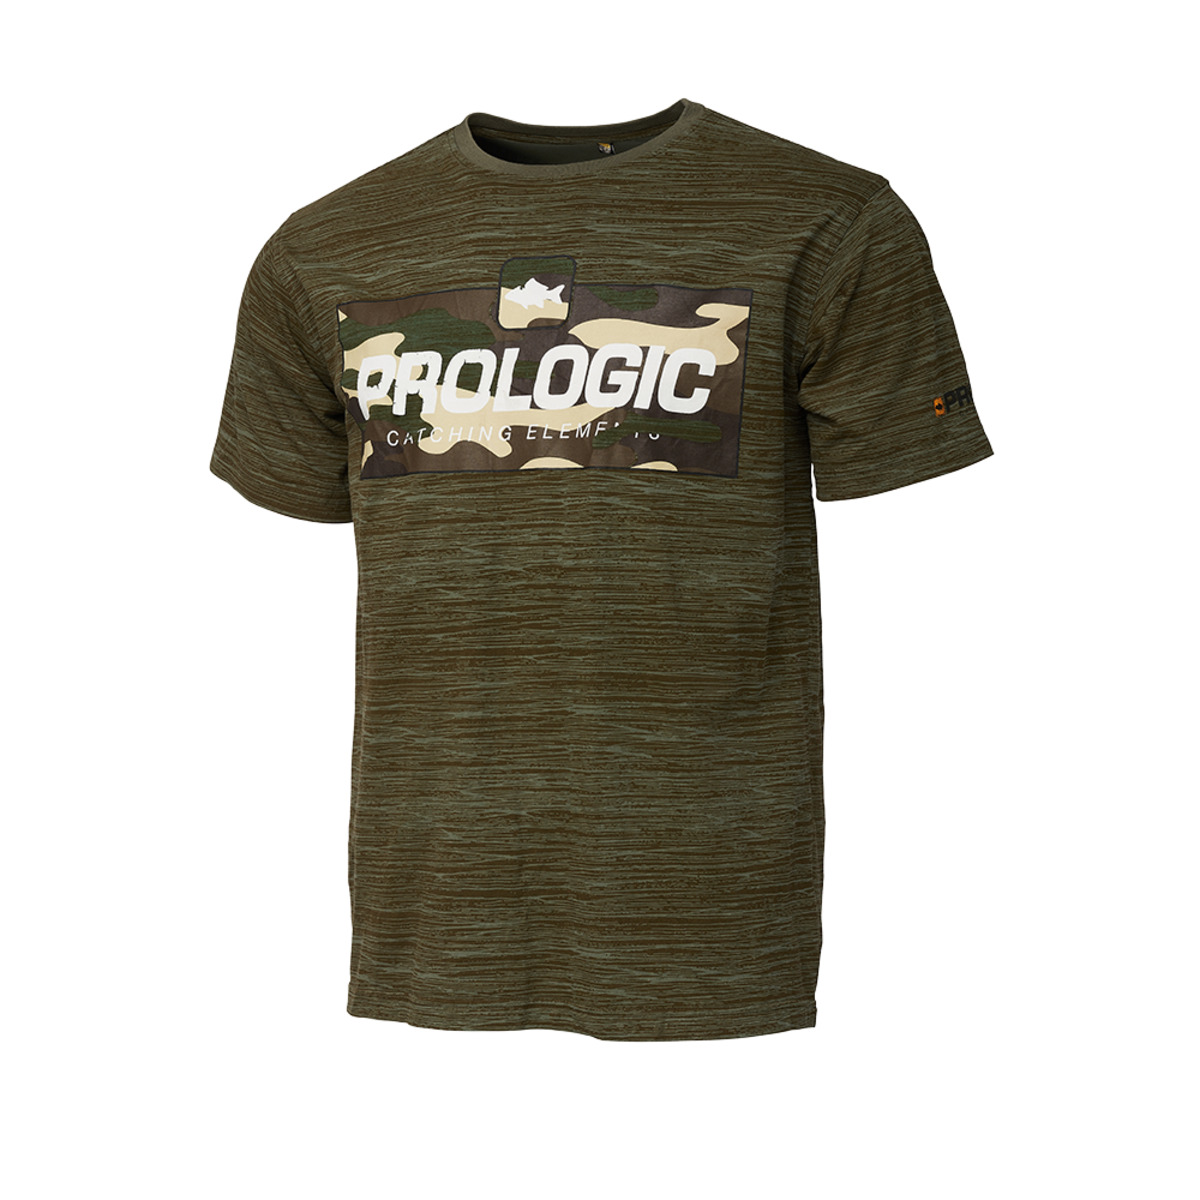 Prologic Bark Print T-shirt - L BURNT OLIVE GREEN